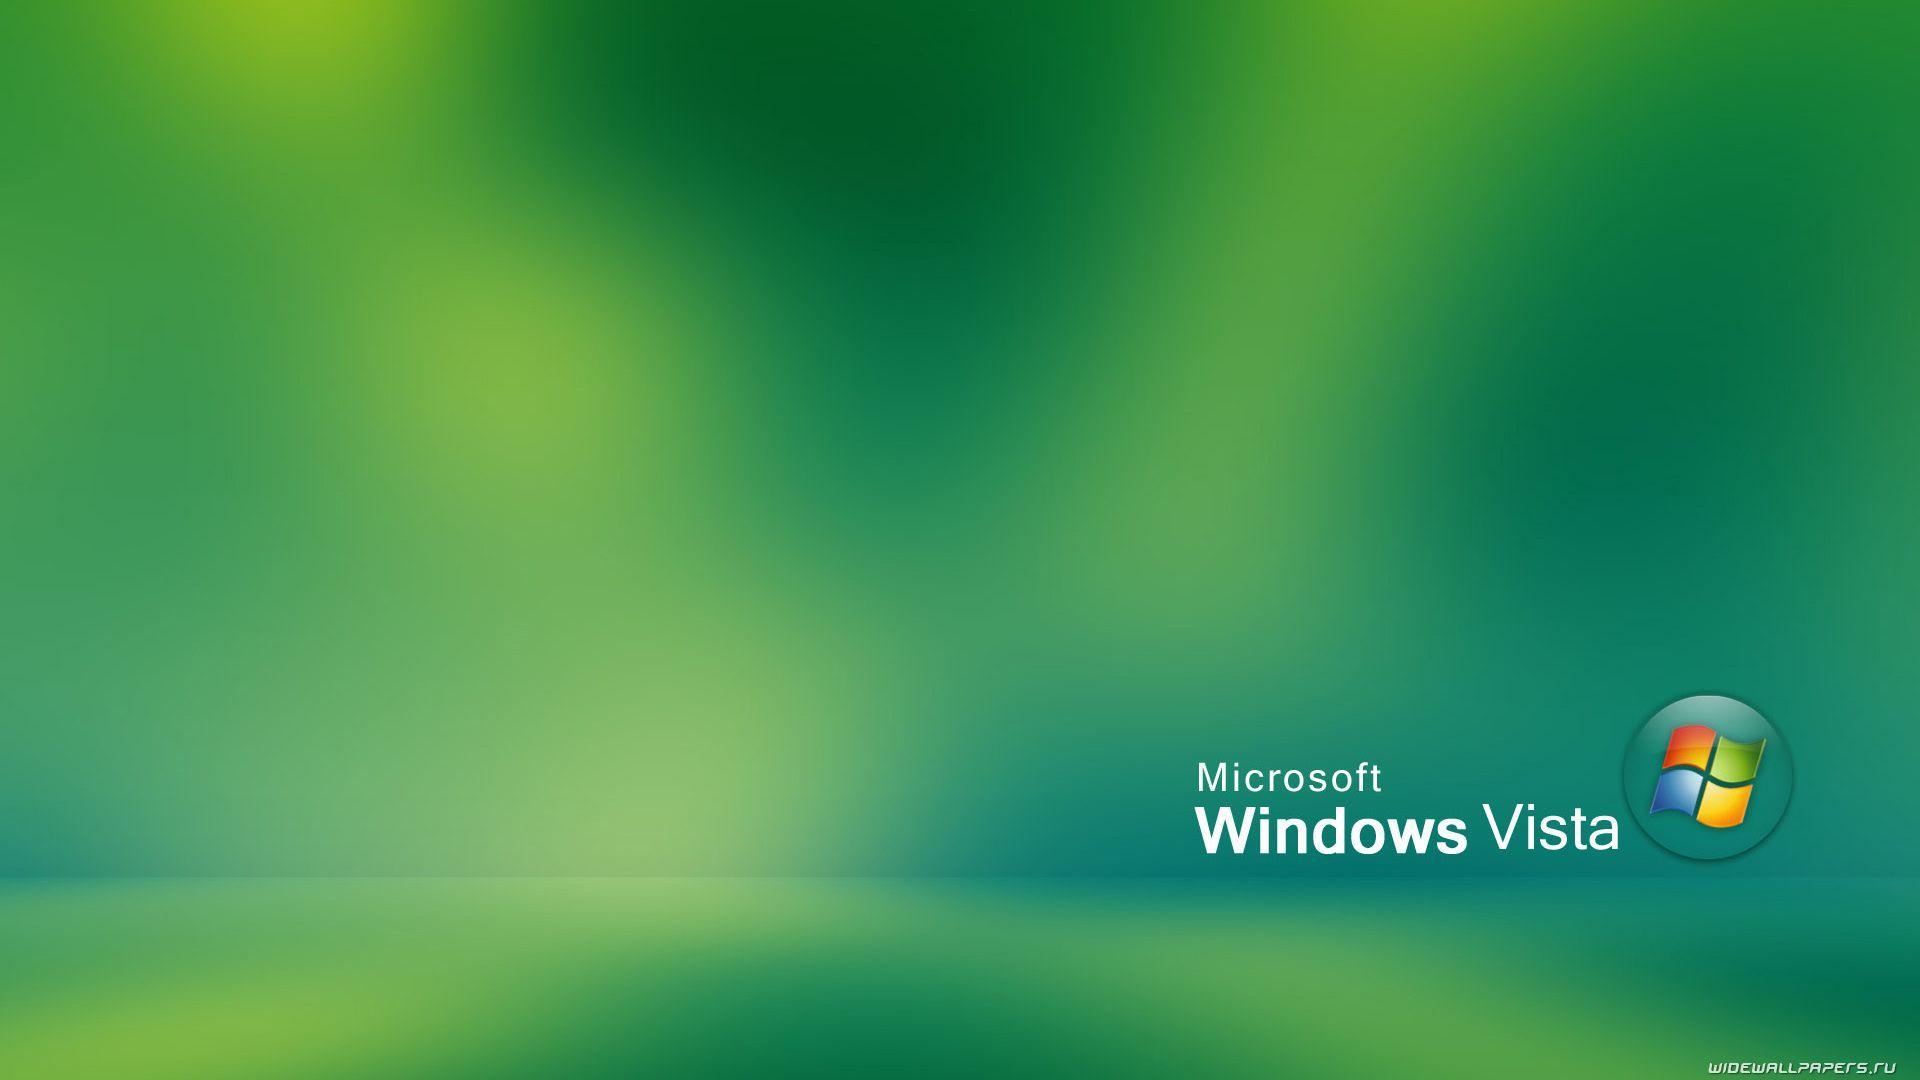 Wallpaper For > Windows Vista Wallpaper